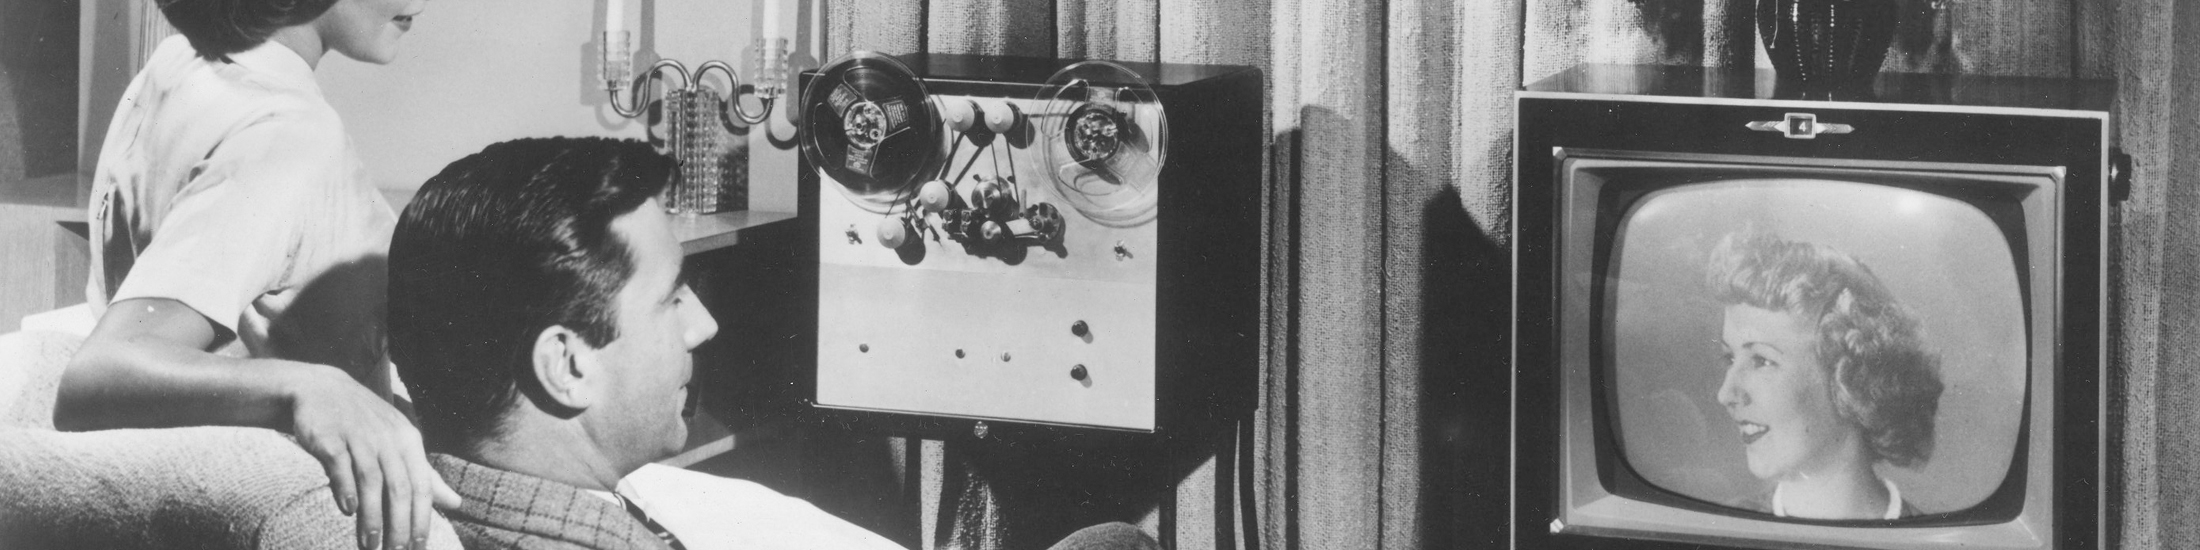 RCA home recording device, 1950-1969